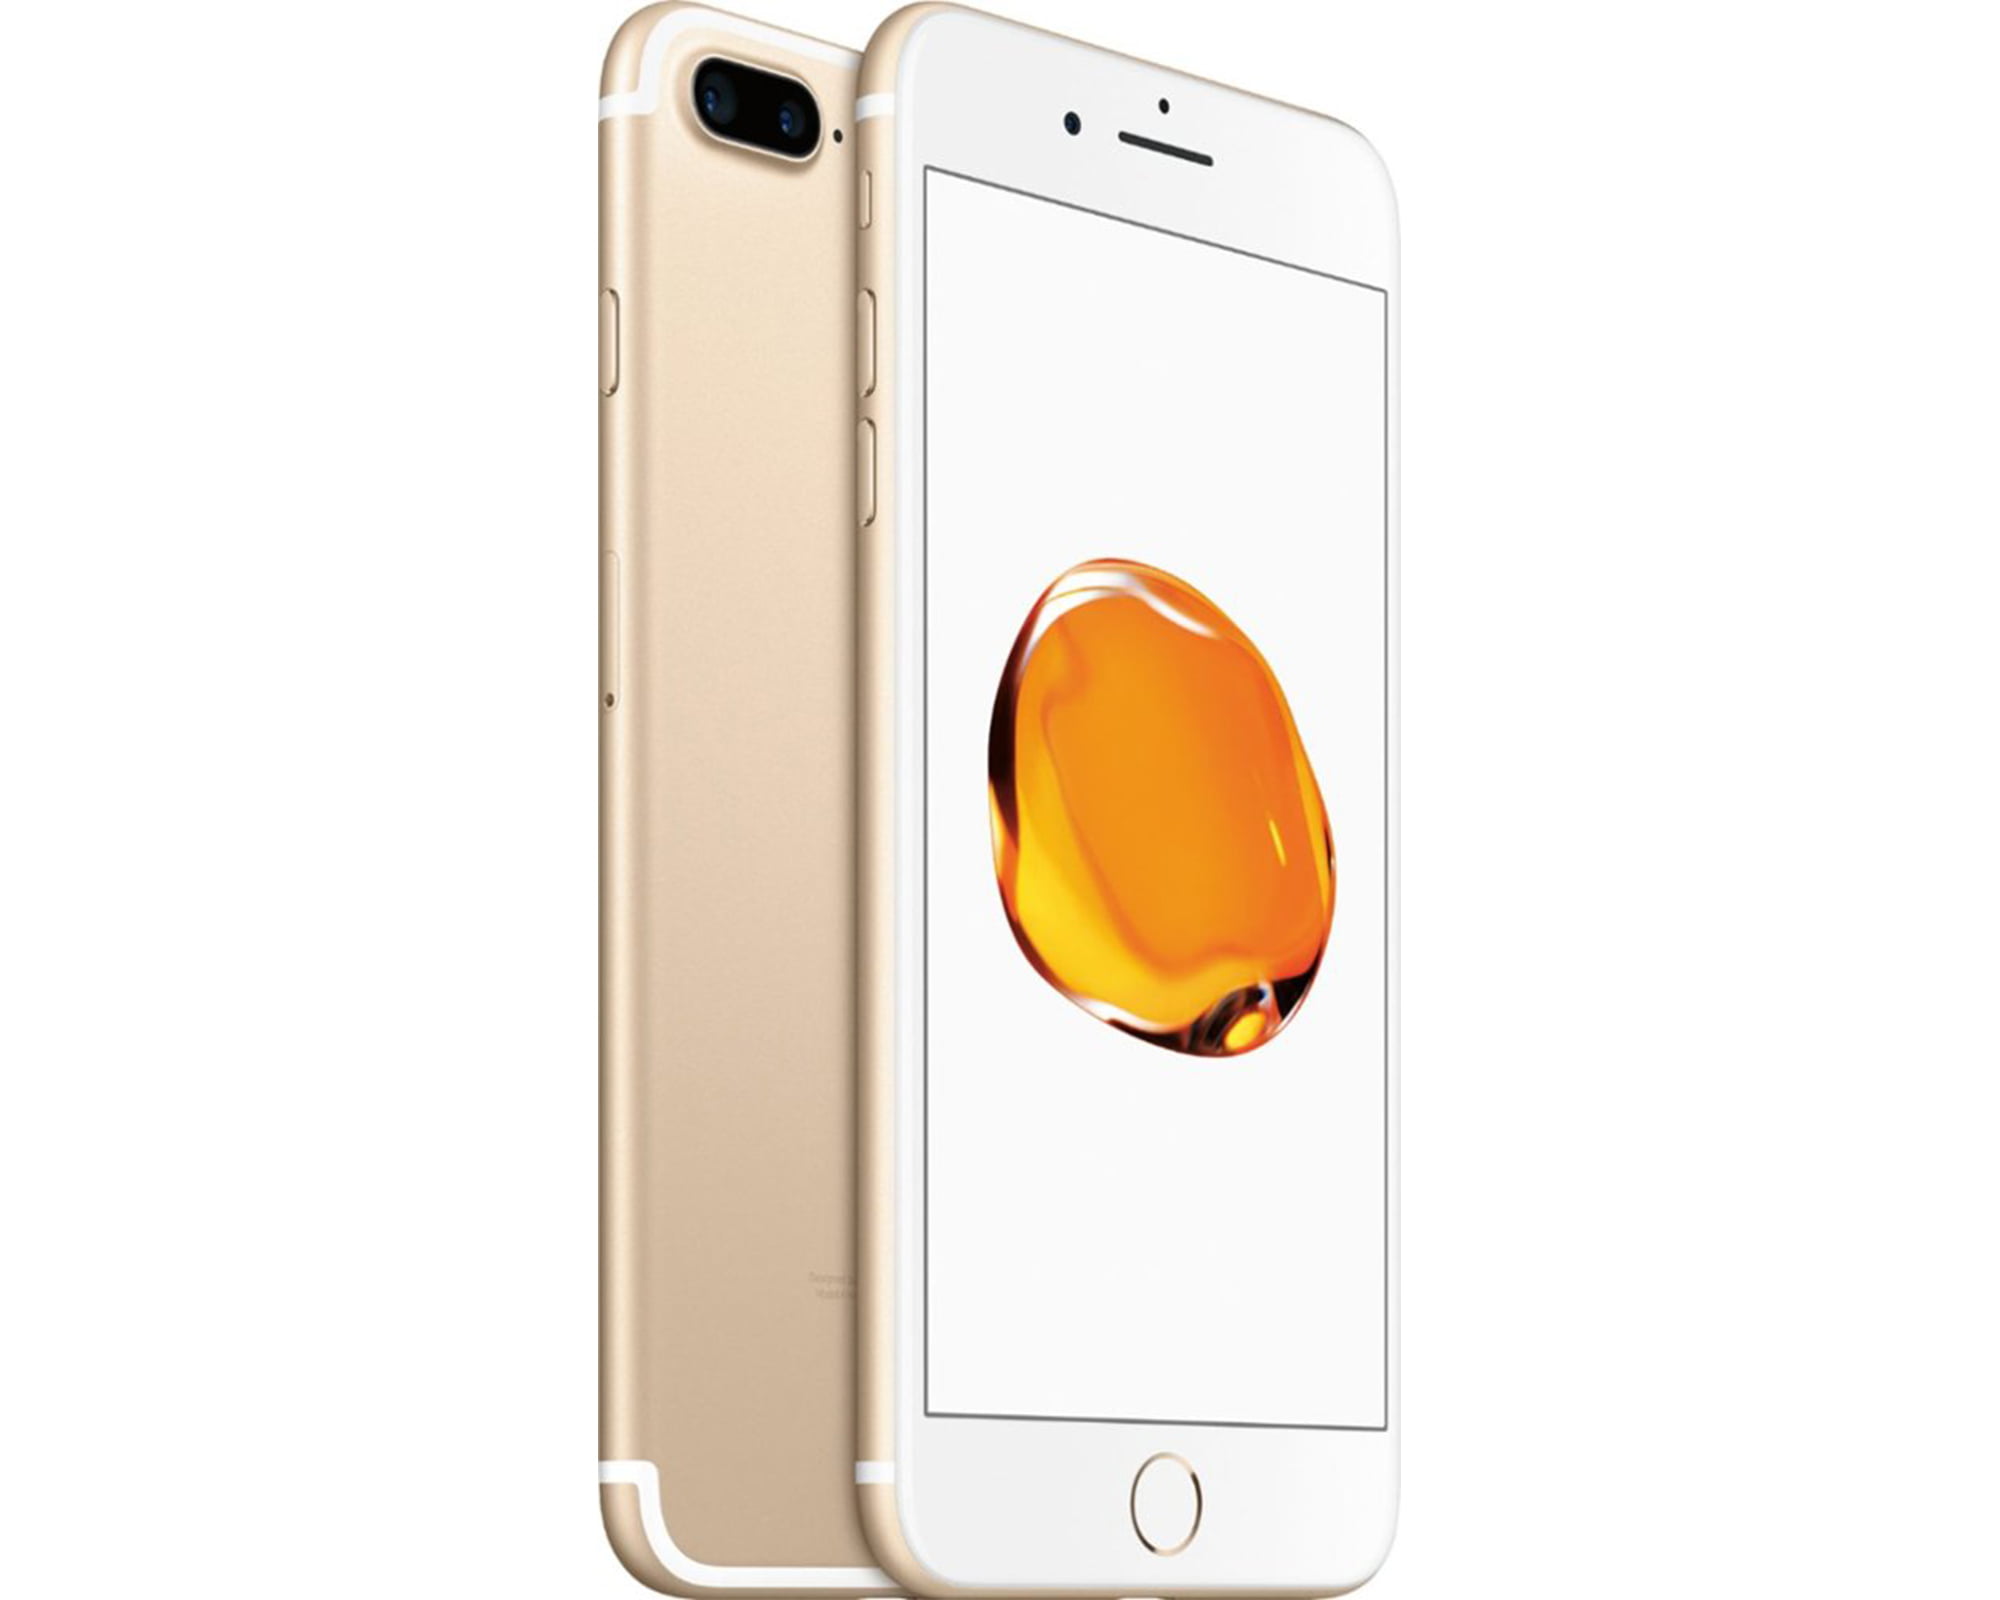 Refurbished iPhone 7 Plus 128GB rose gold